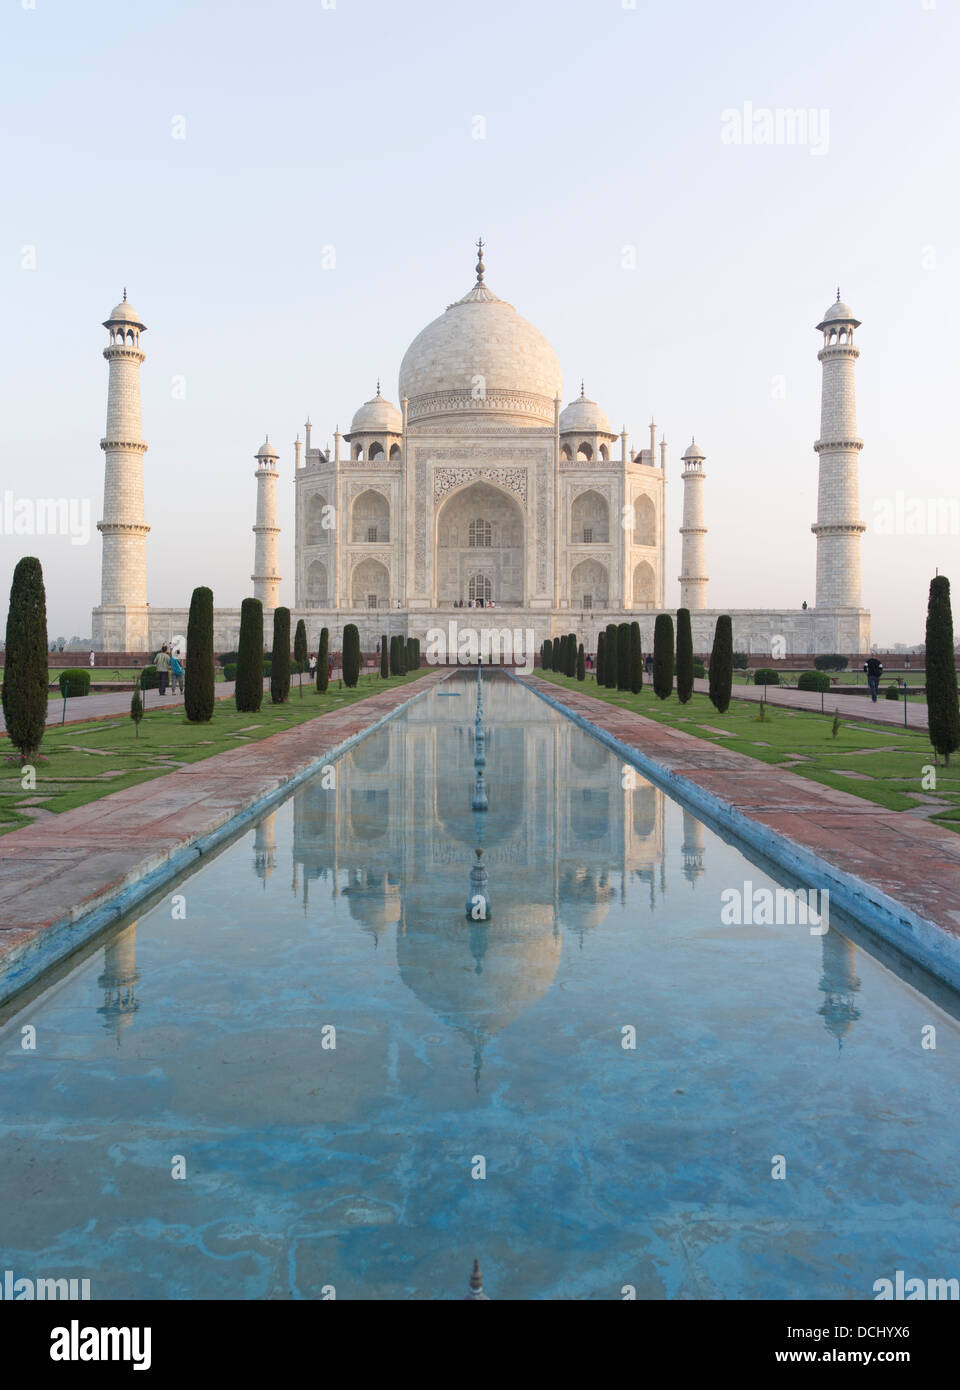 Taj Mahal weißen Marmor-Mausoleum - Agra, Indien ein UNESCO-Weltkulturerbe Stockfoto